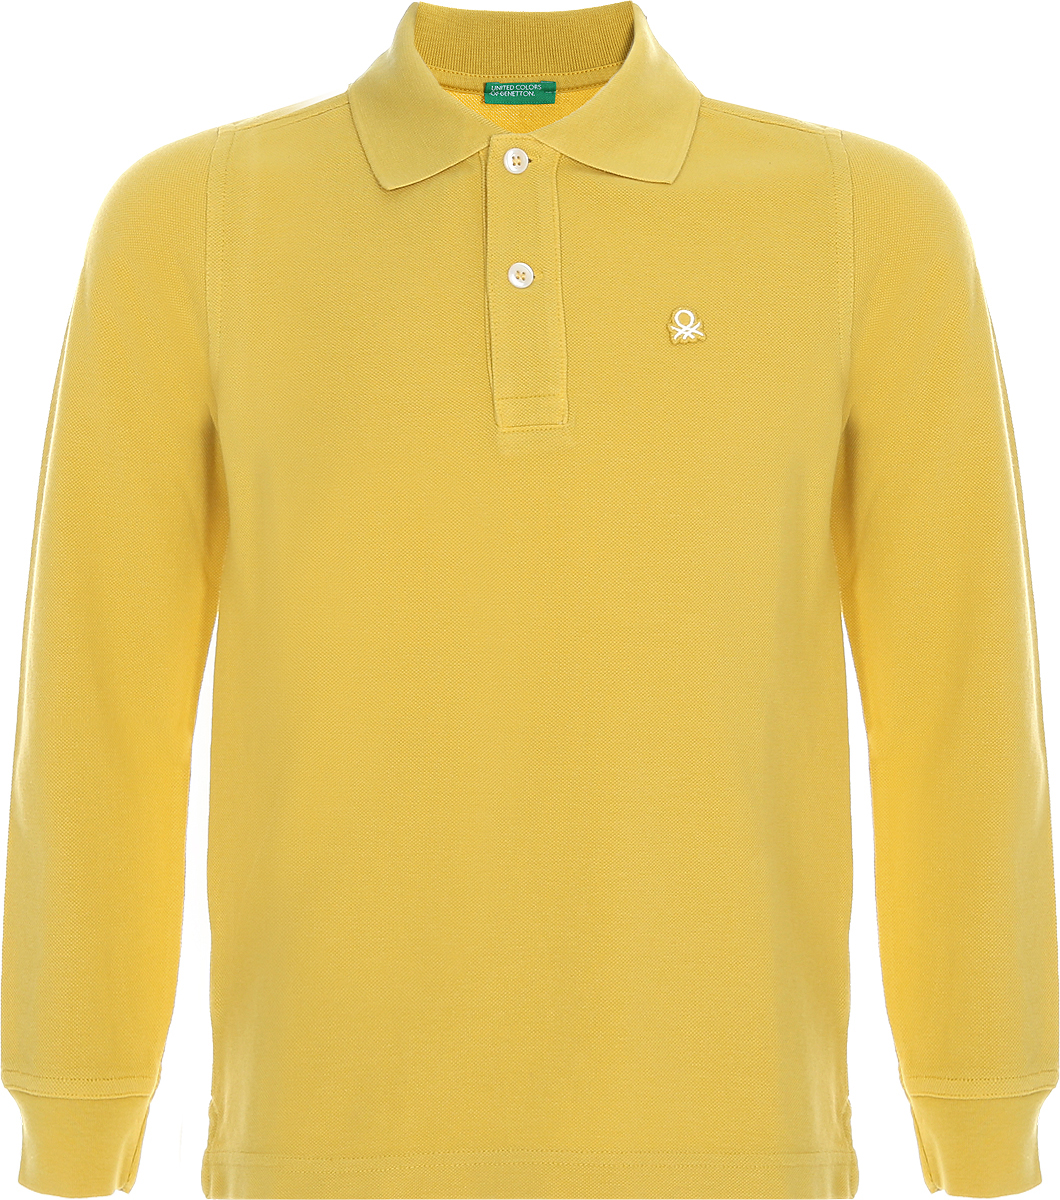 Кофта для мальчика United Colors of Benetton, цвет: желтый. 3089C3090_36H. Размер 110